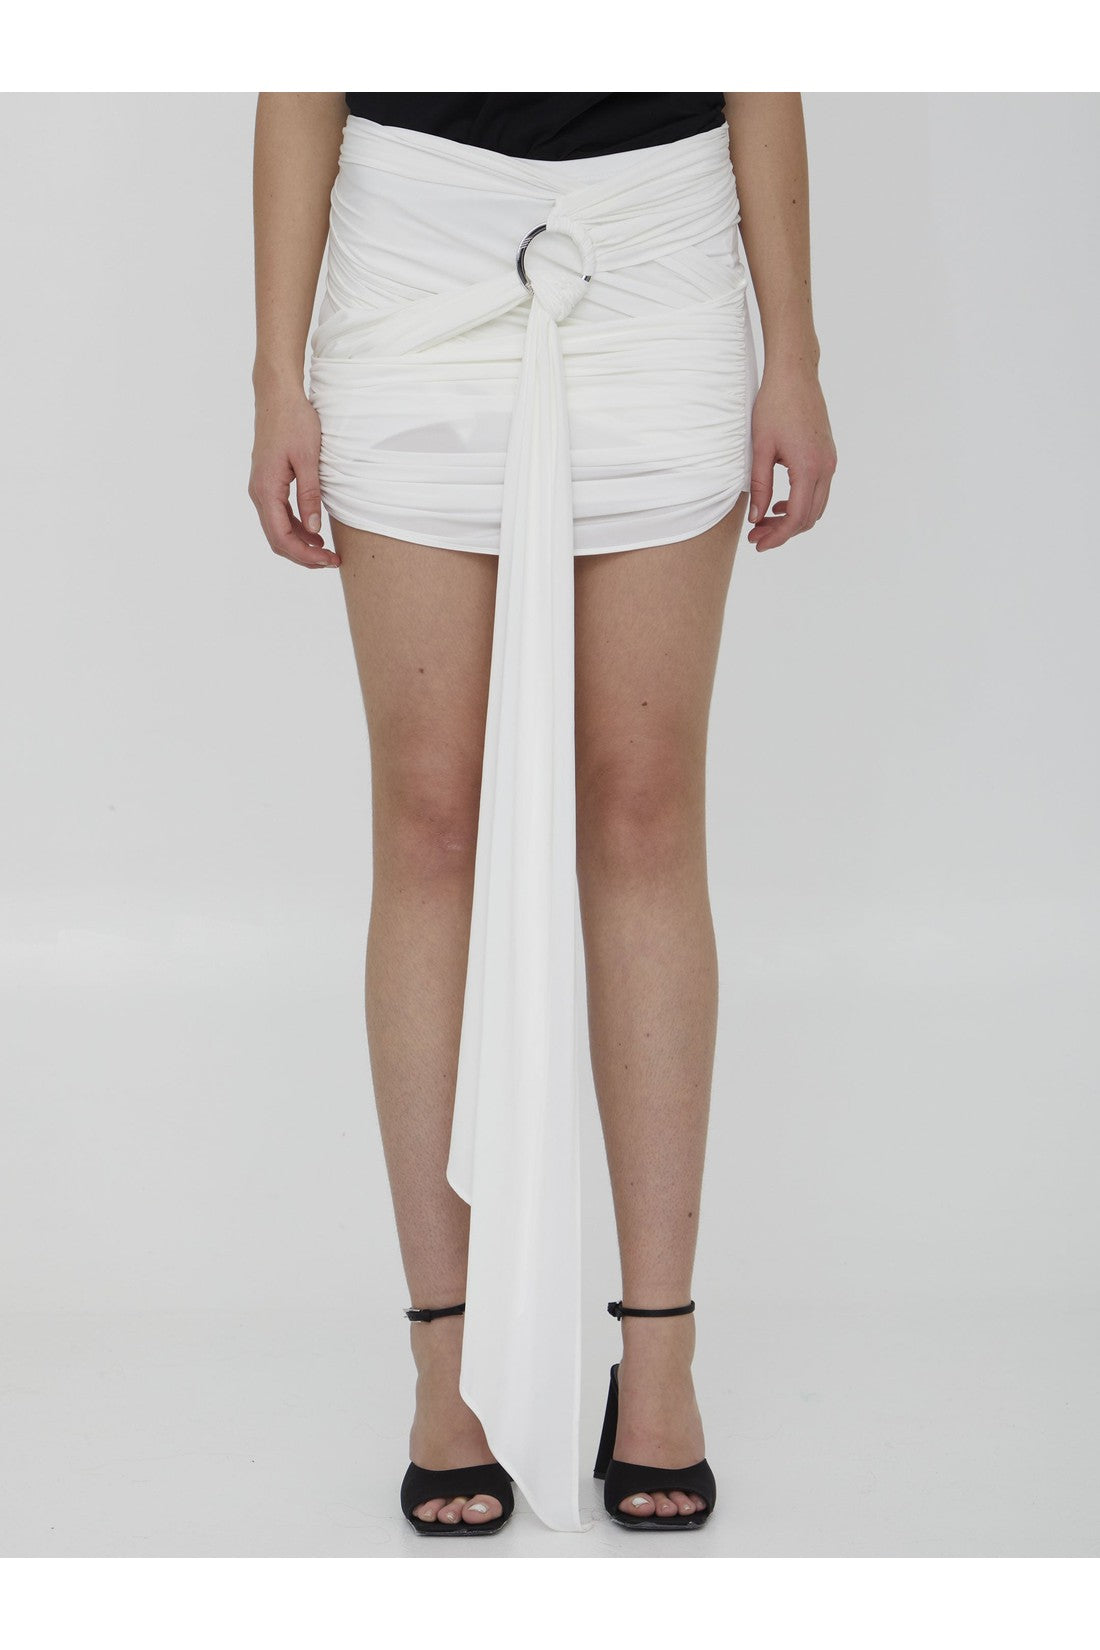 Fran miniskirt